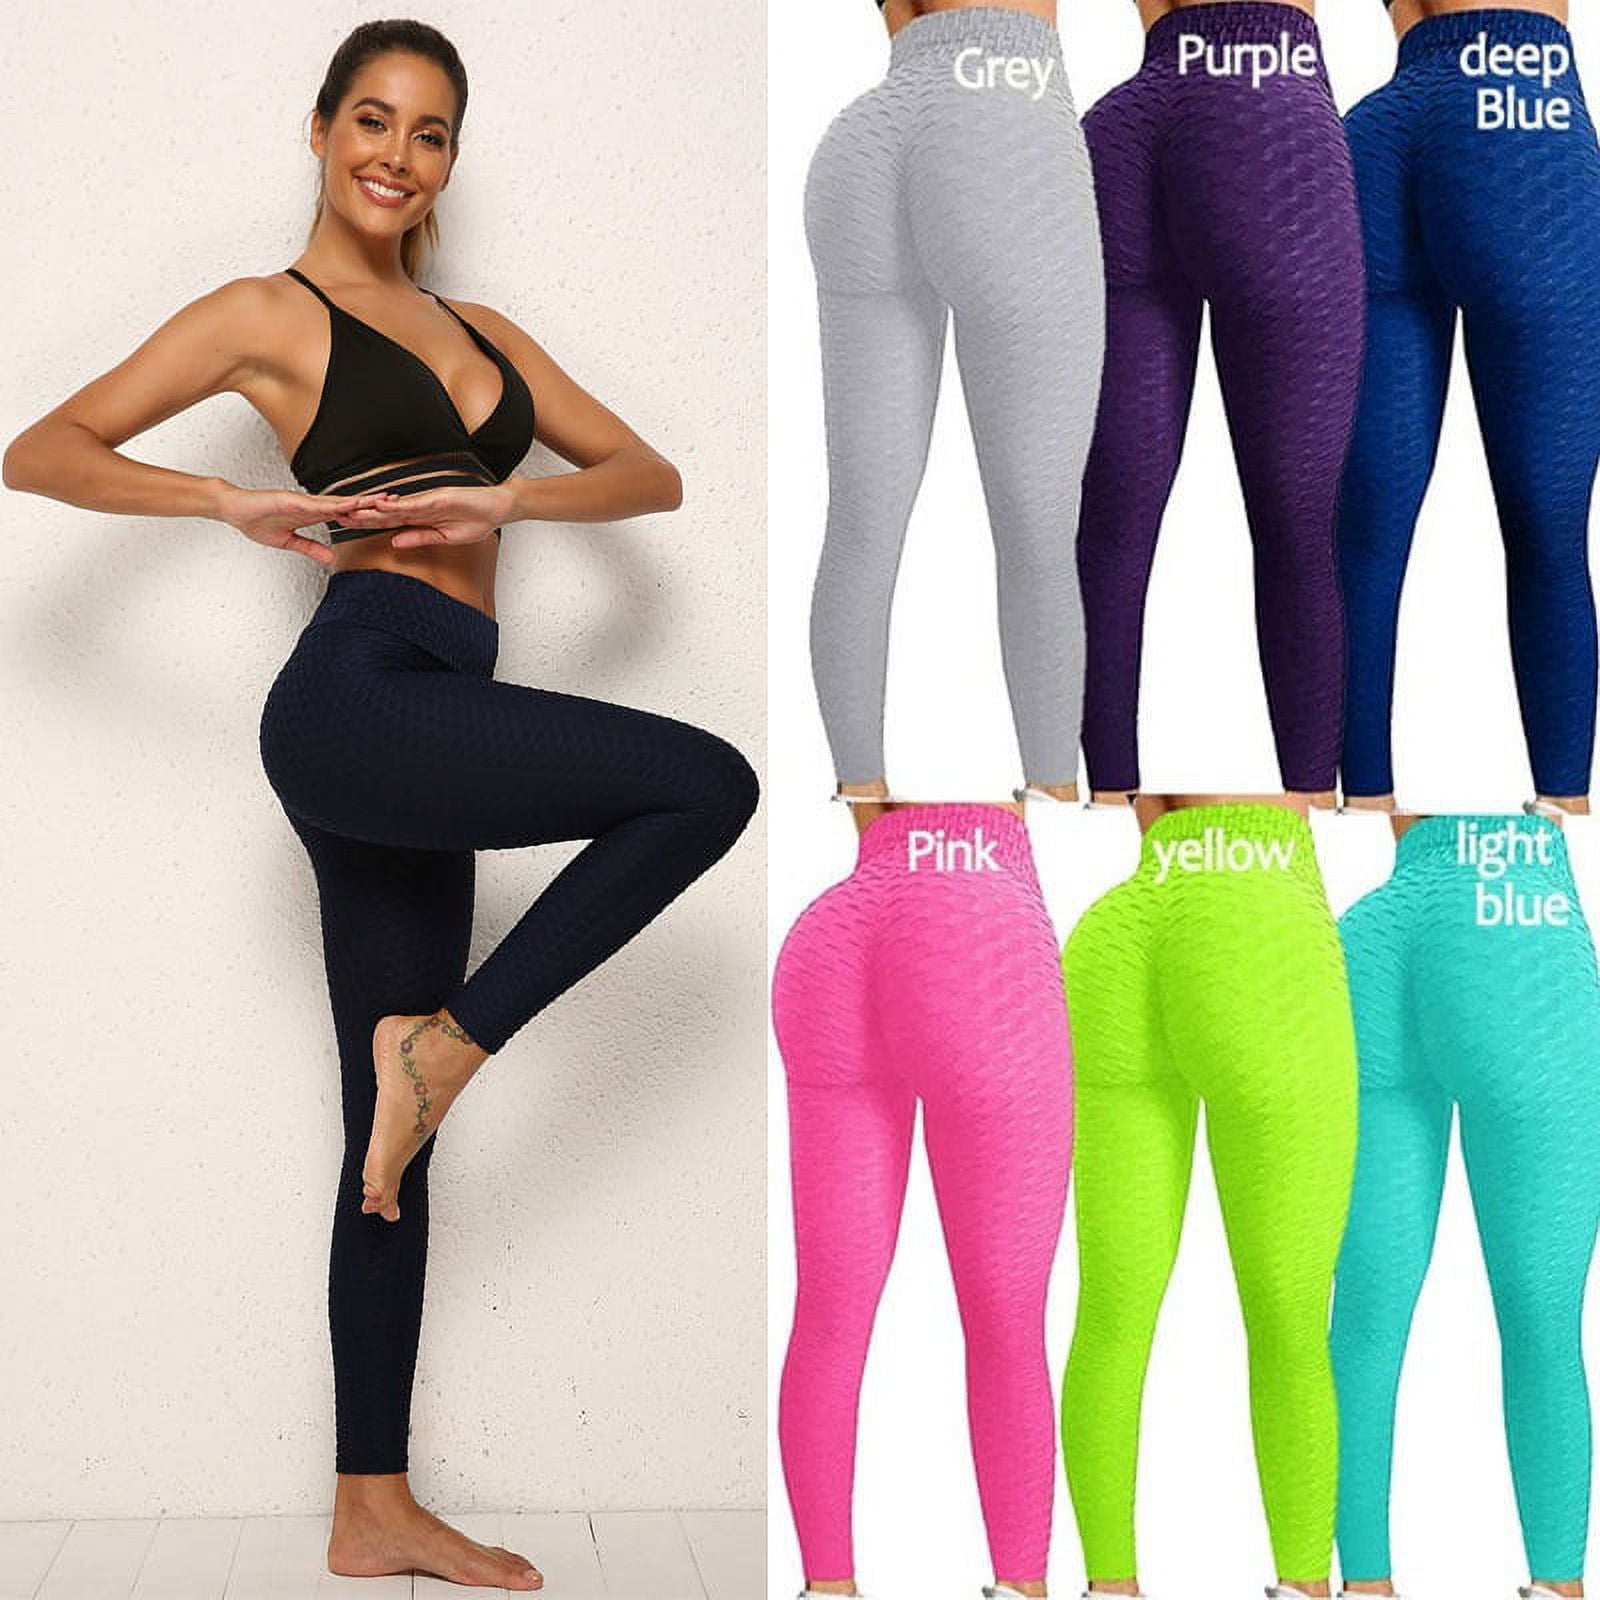 Canrulo Women Booty Legging Yoga Pants Bubble Butt Lifting Workout Tights  Black XL